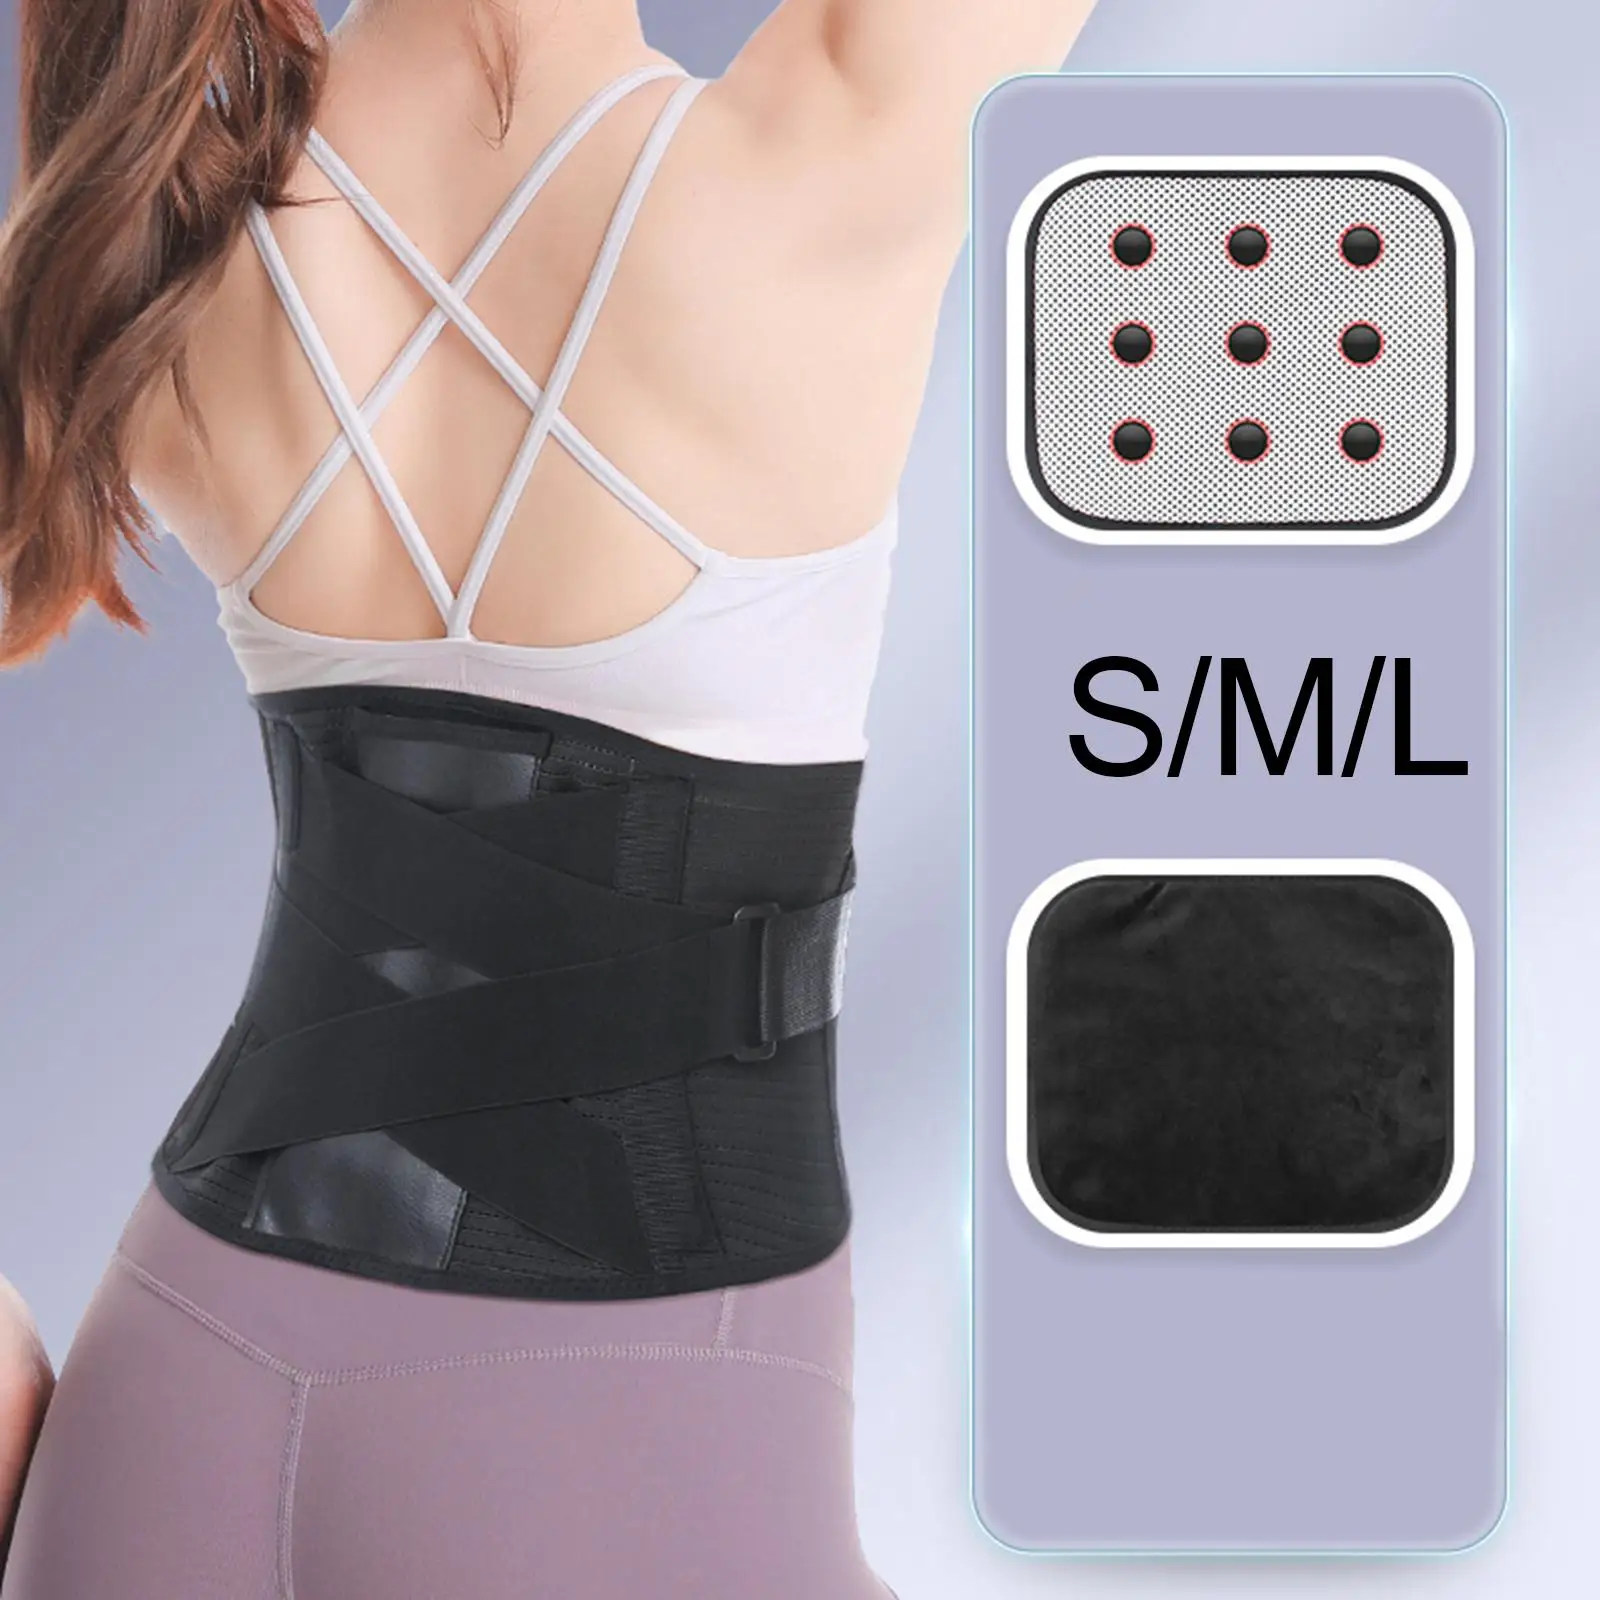 Waist Support Belt Self Heating  Belt  for Back Pain Corset Lower Back  for Gym Training